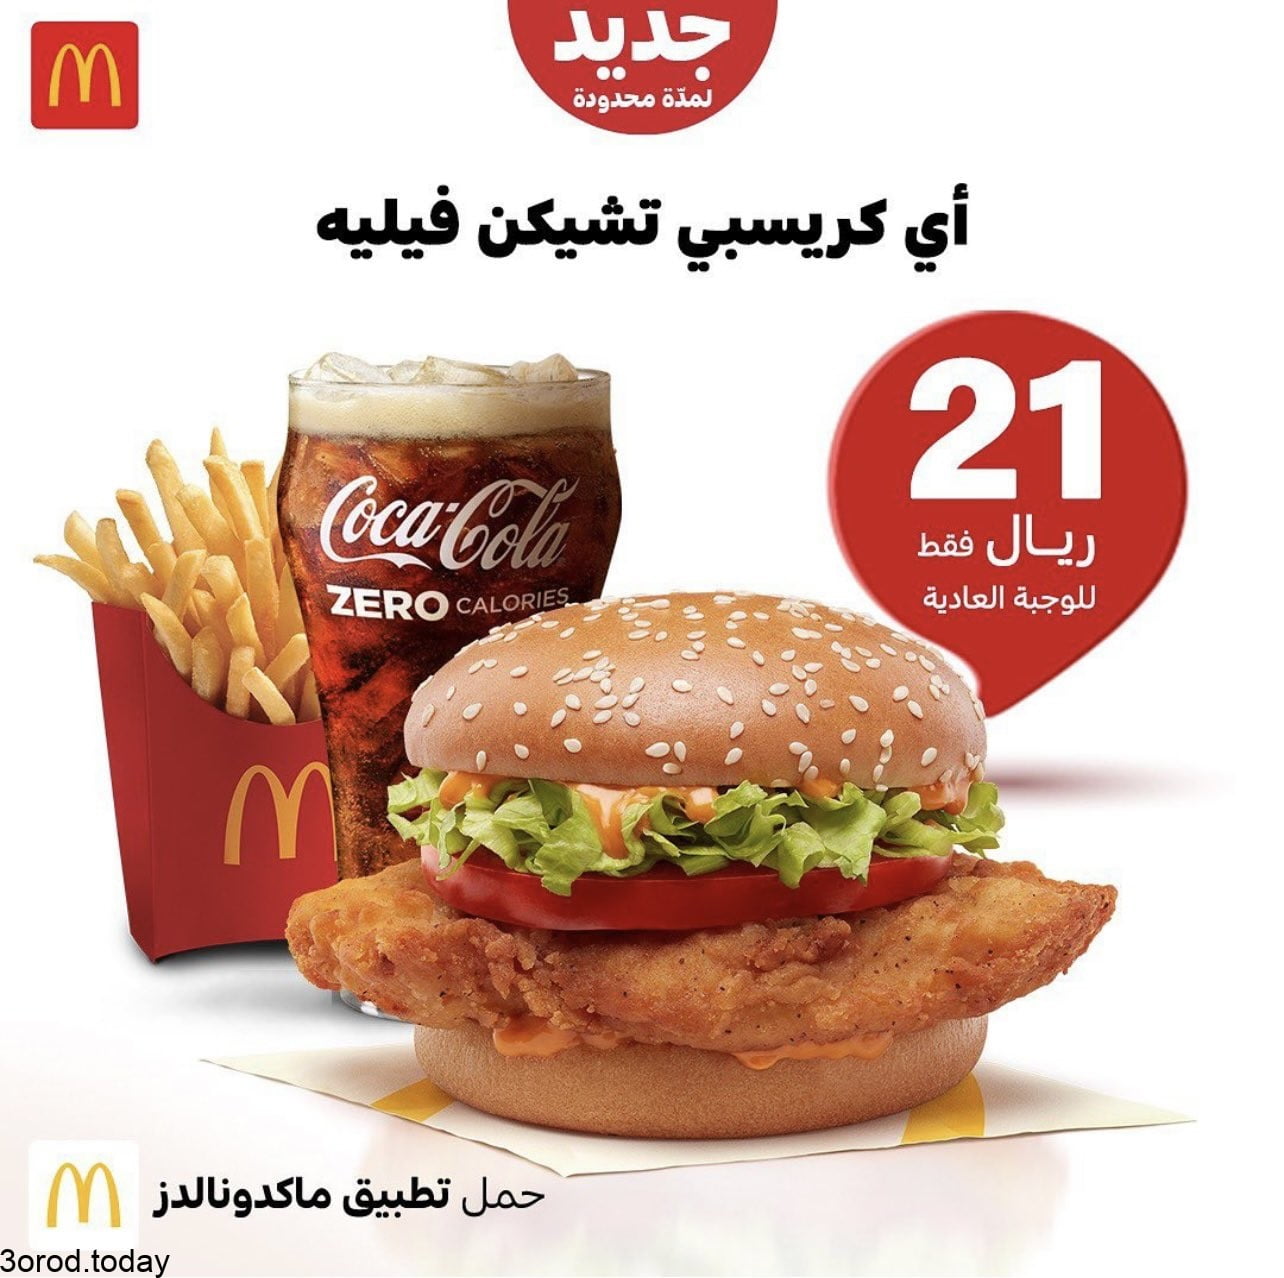 E D2L4MXoAAOs5X - عروض المطاعم : عروض مطعم ماكدونالدز السعودية الغربية والجنوبية اي كريسبي تشكين بـ 21 ريال